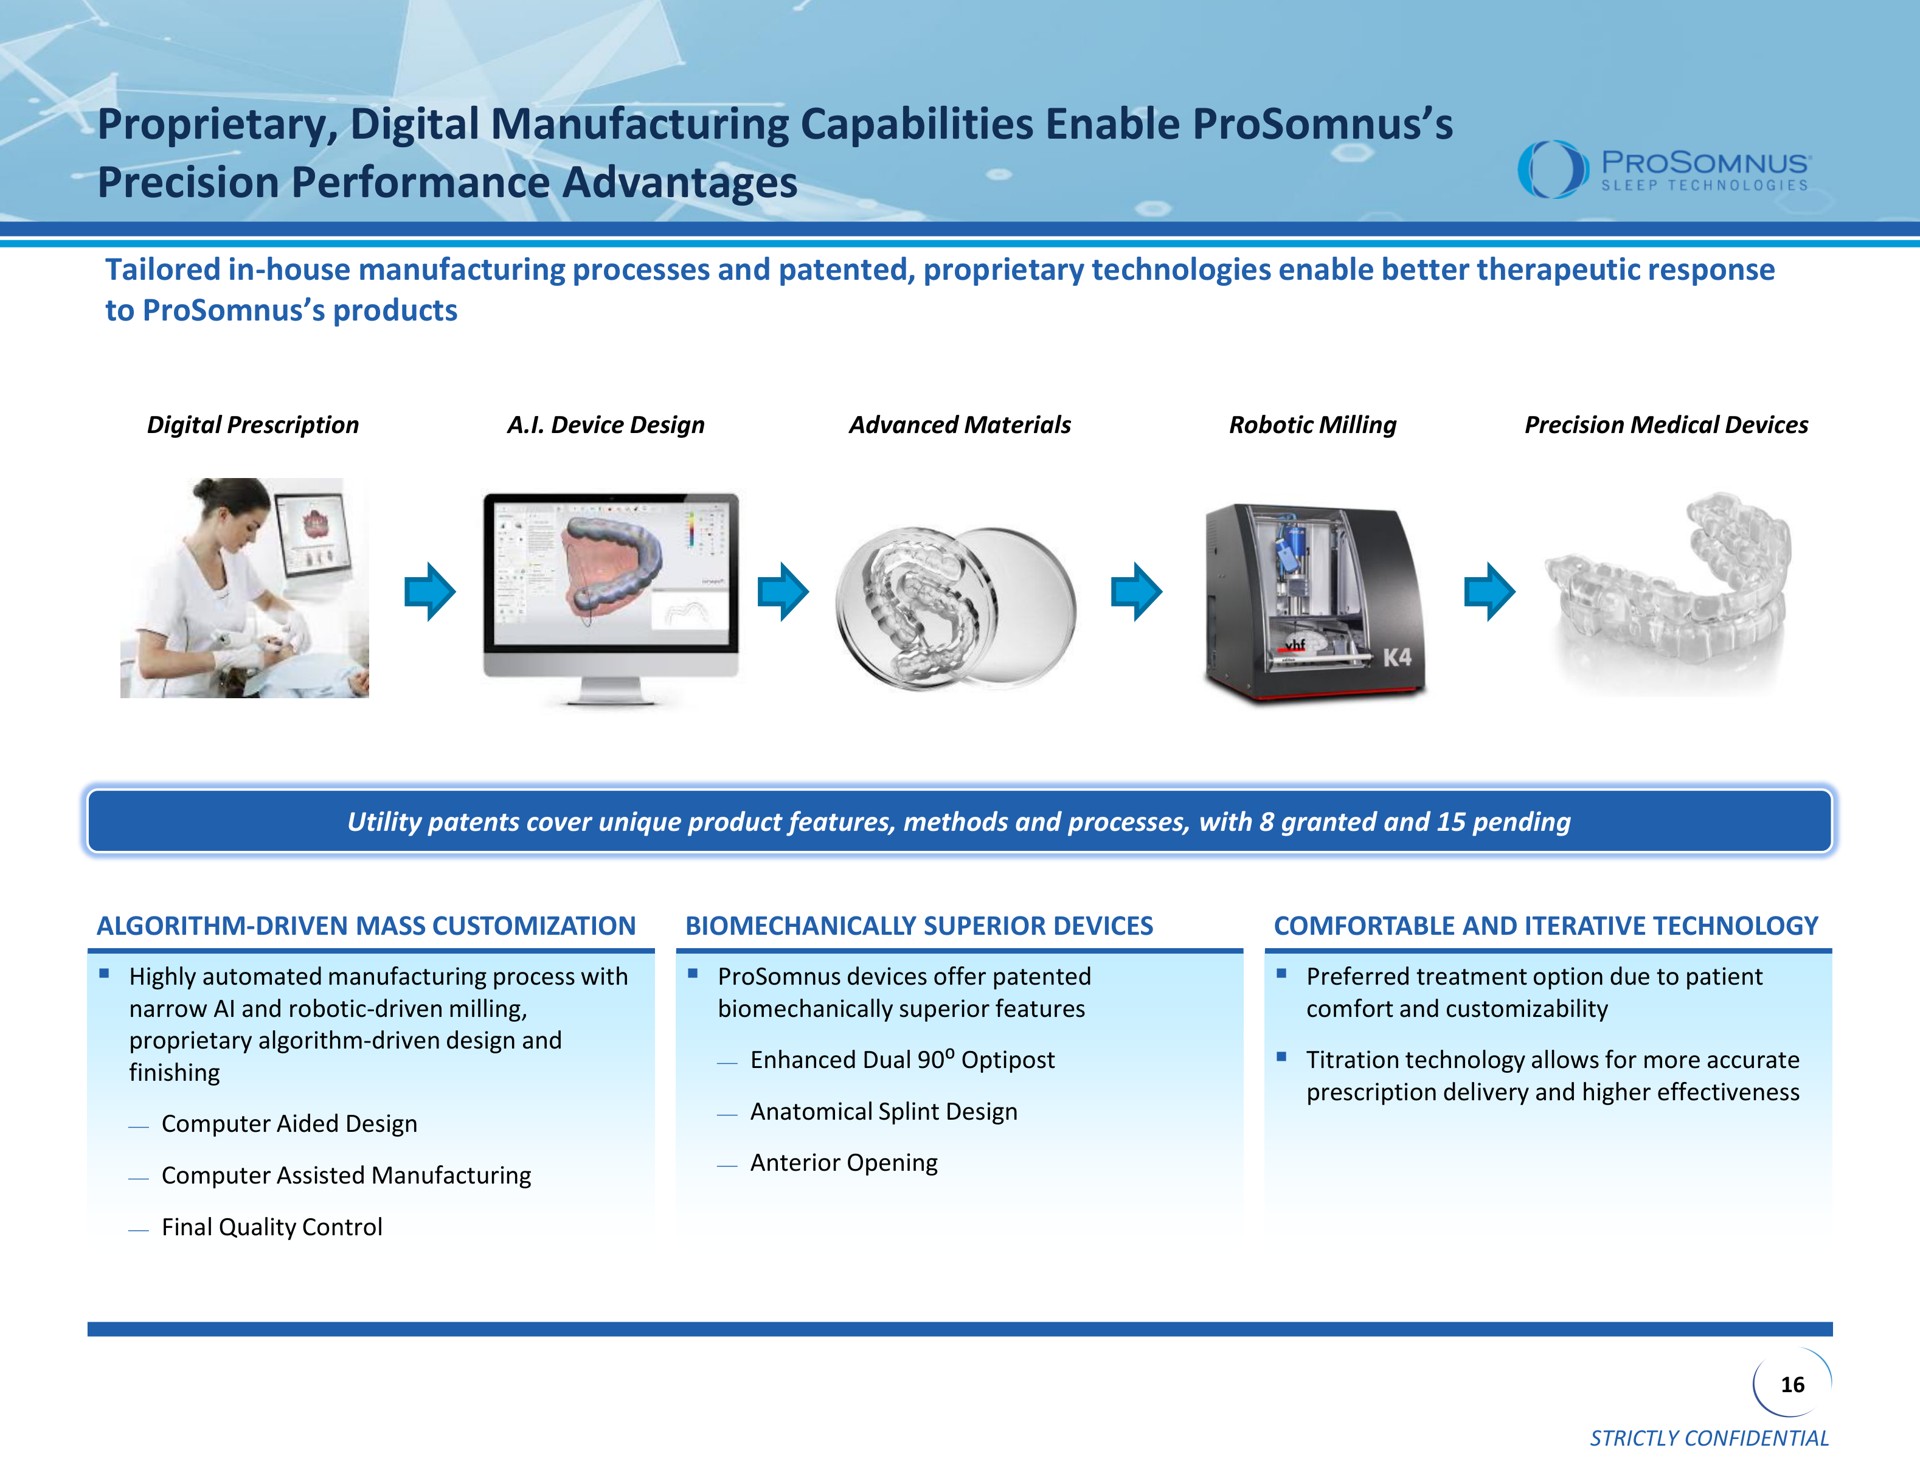 proprietary digital manufacturing capabilities enable precision performance advantages us | ProSomnus